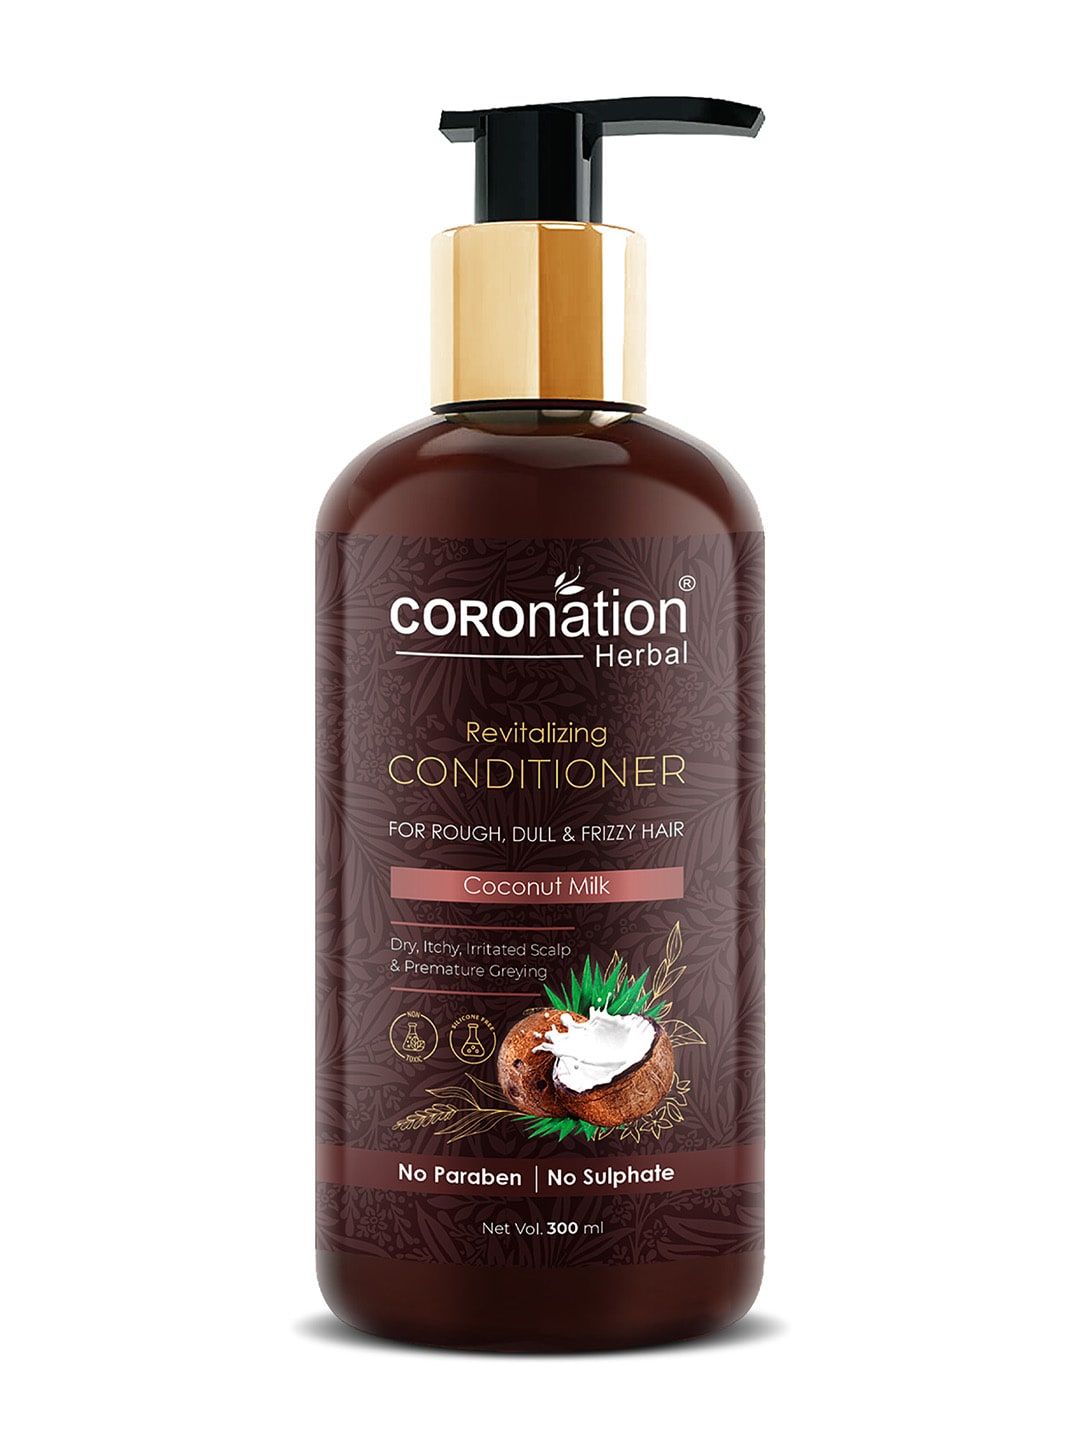 COROnation Herbal Revitalizing Conditioner with Coconut Milk 300 ml Price in India